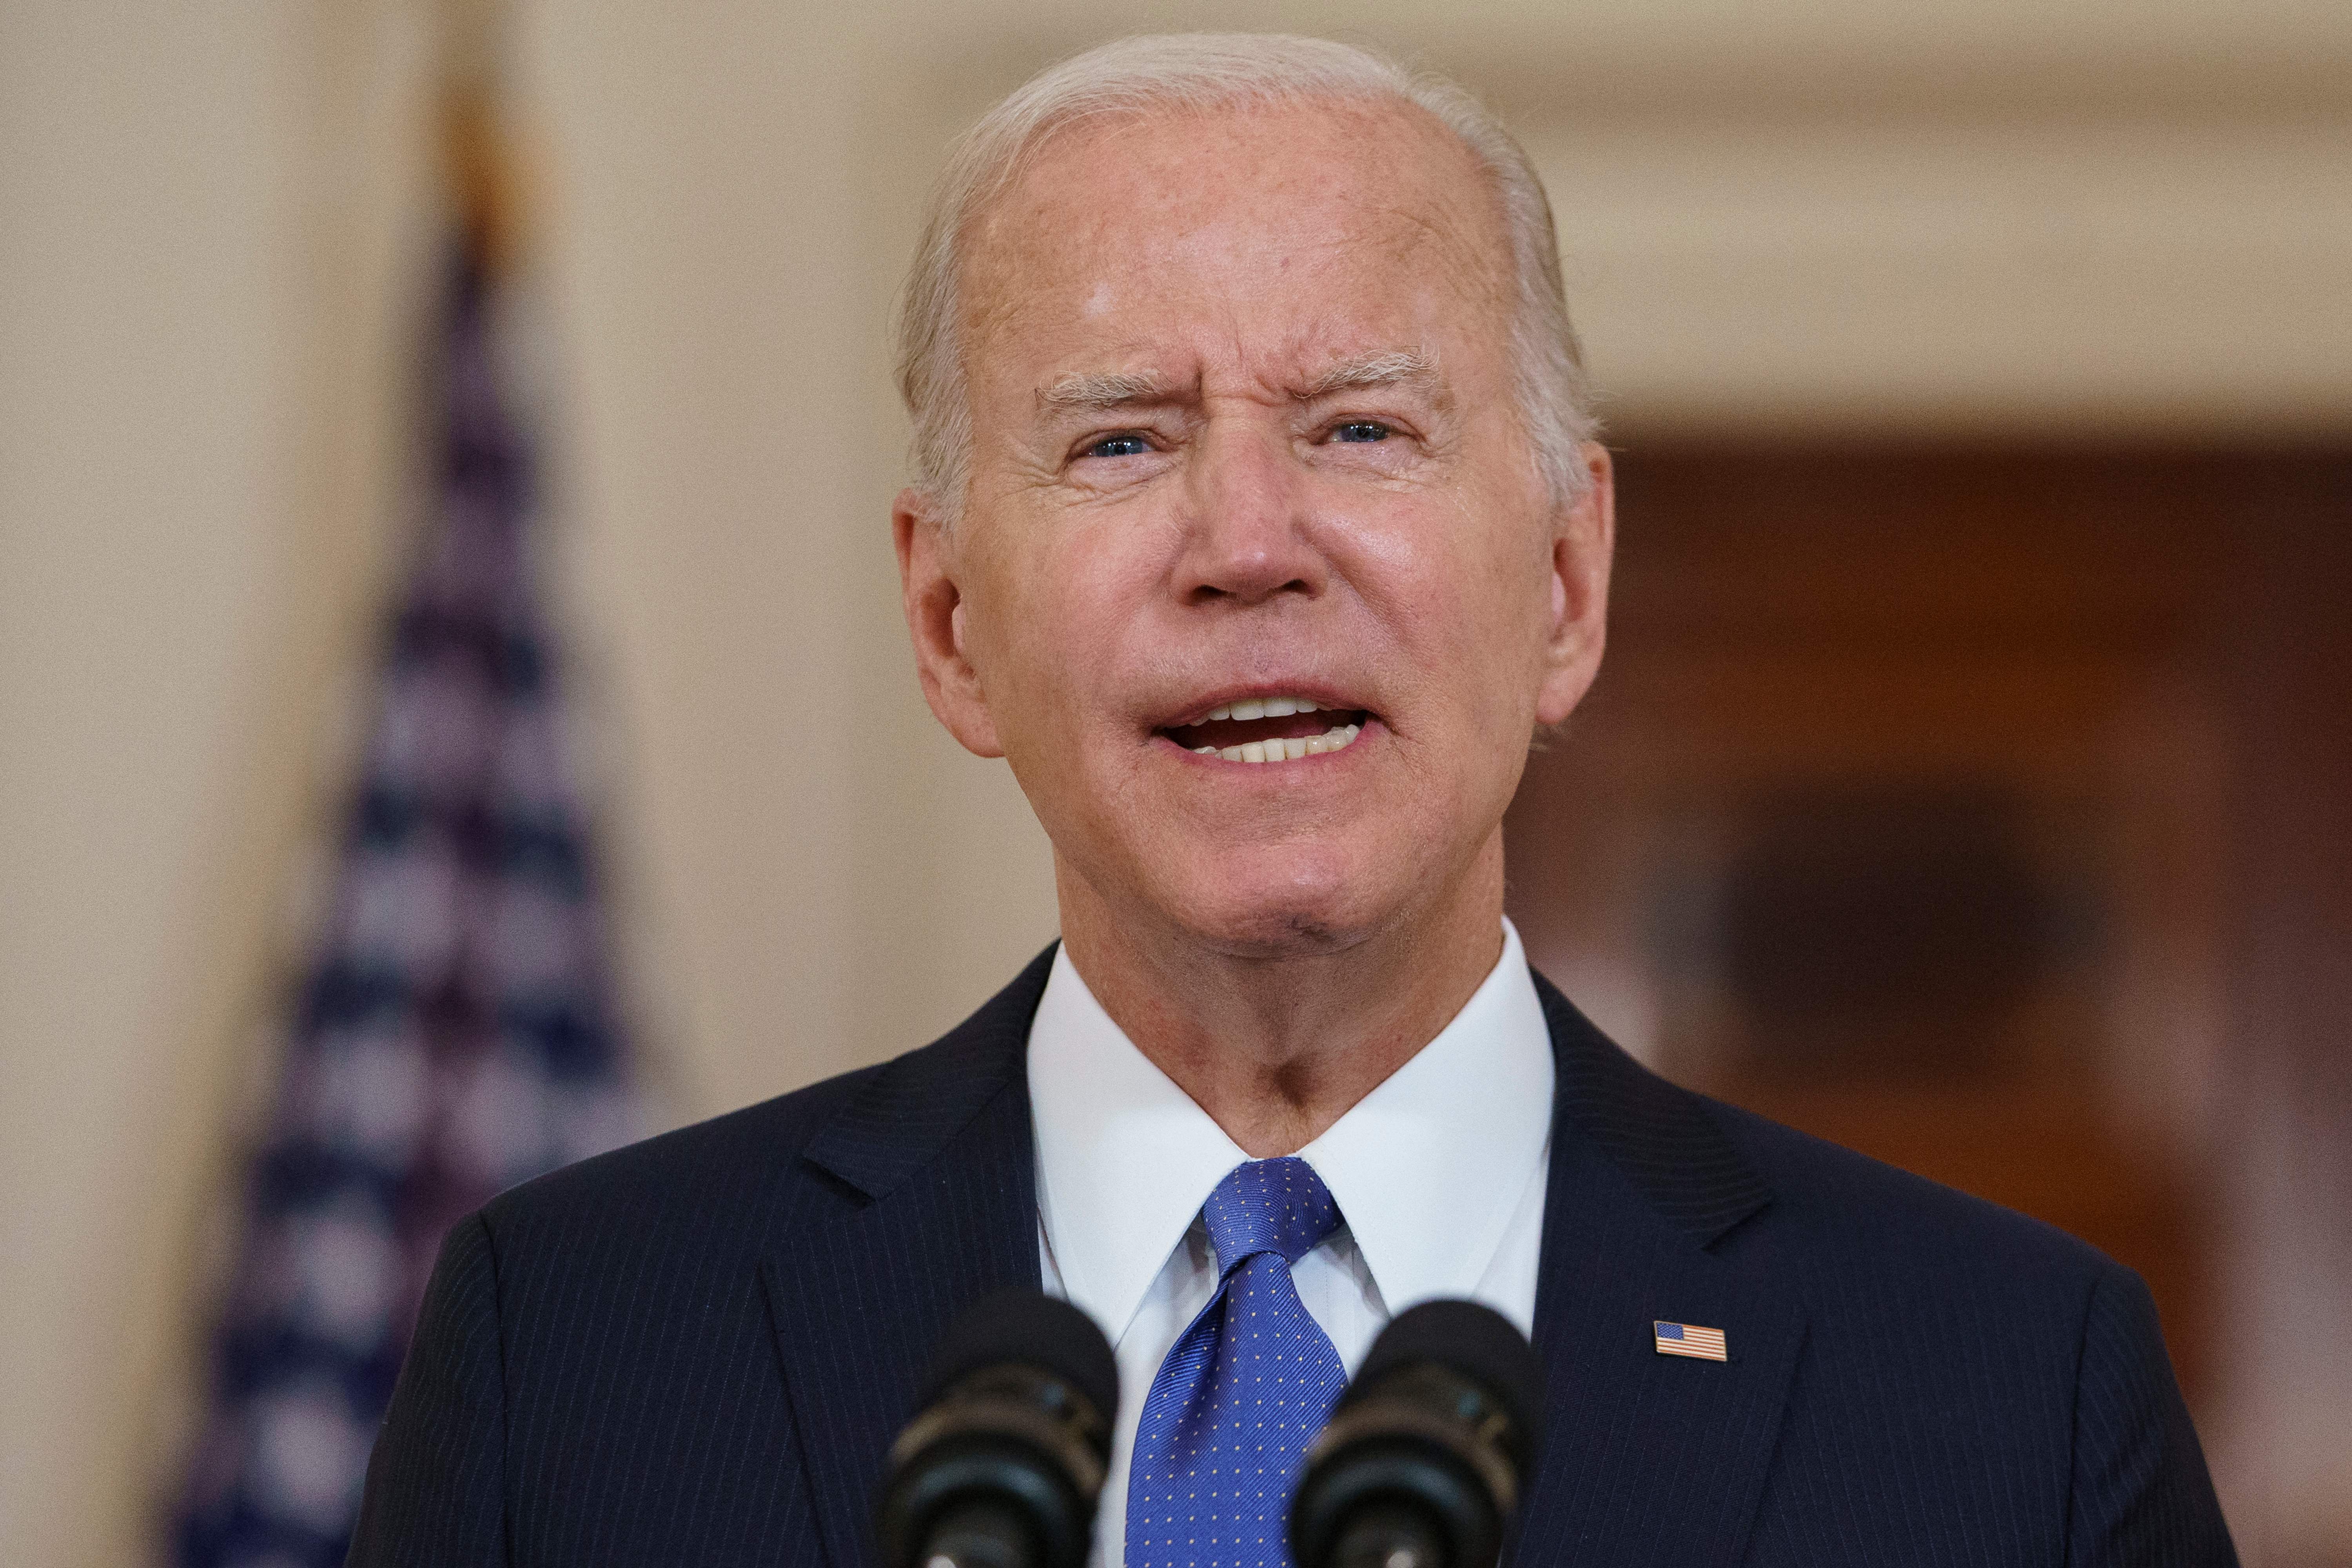 President Joe Biden speaks at the White House in Washington, on Friday, after the Supreme Court overturned Roe v. Wade.